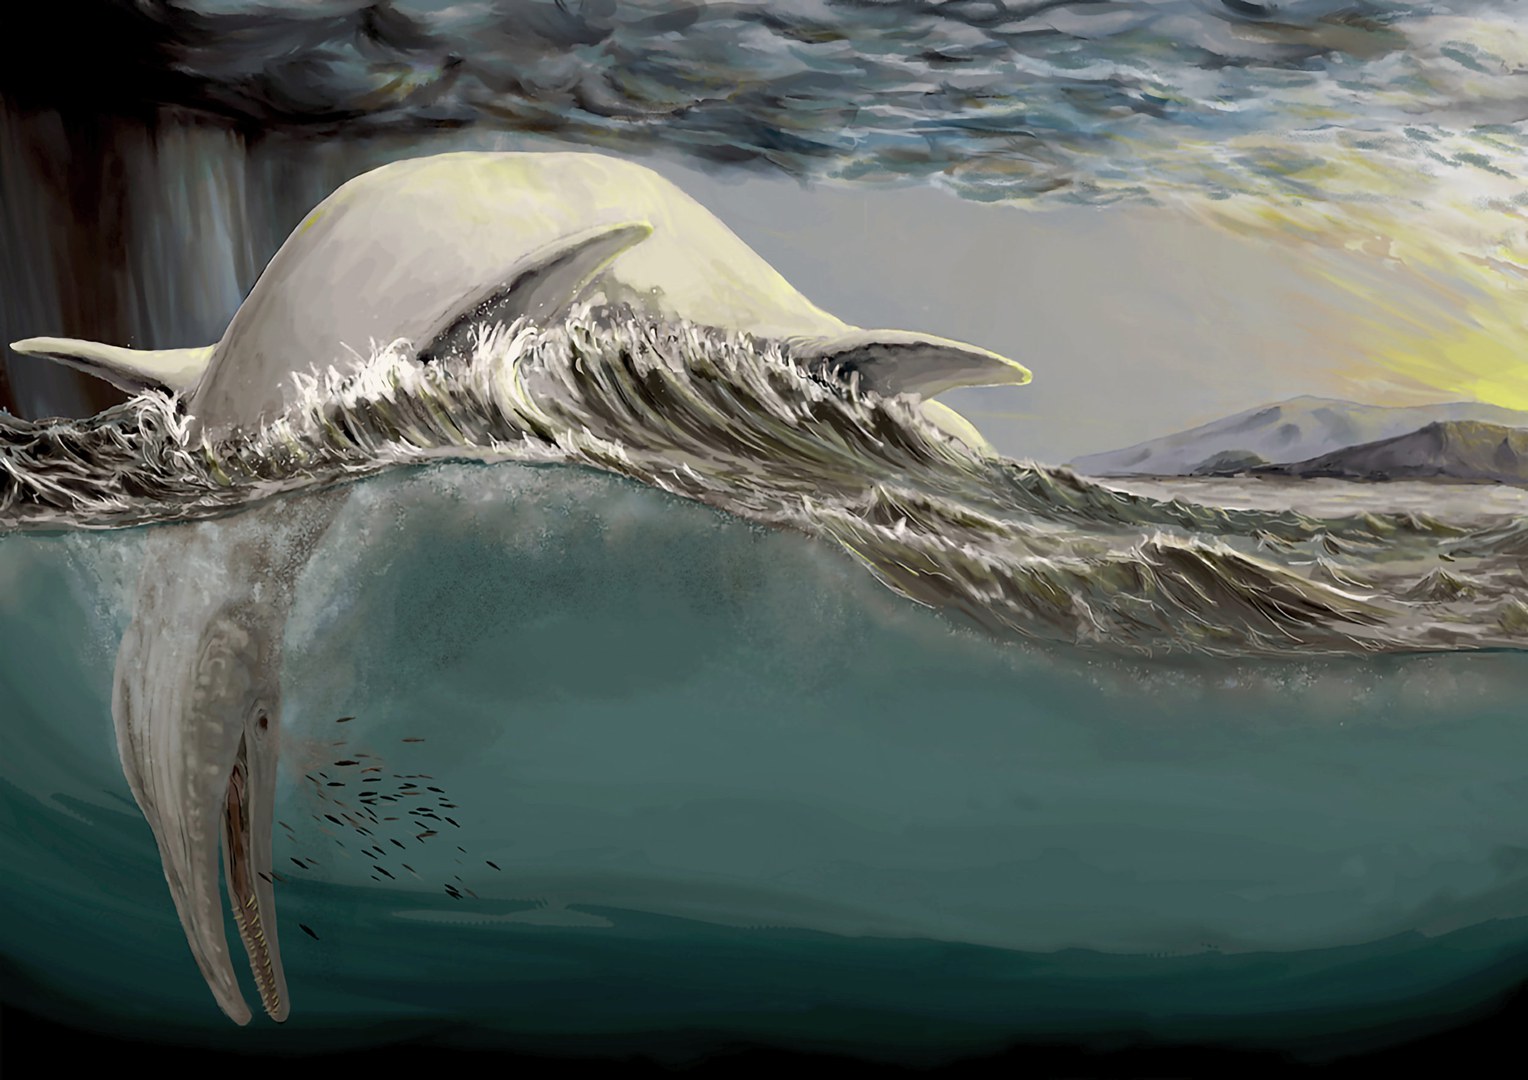 A reconstruction of a gigantic ichthyosaur